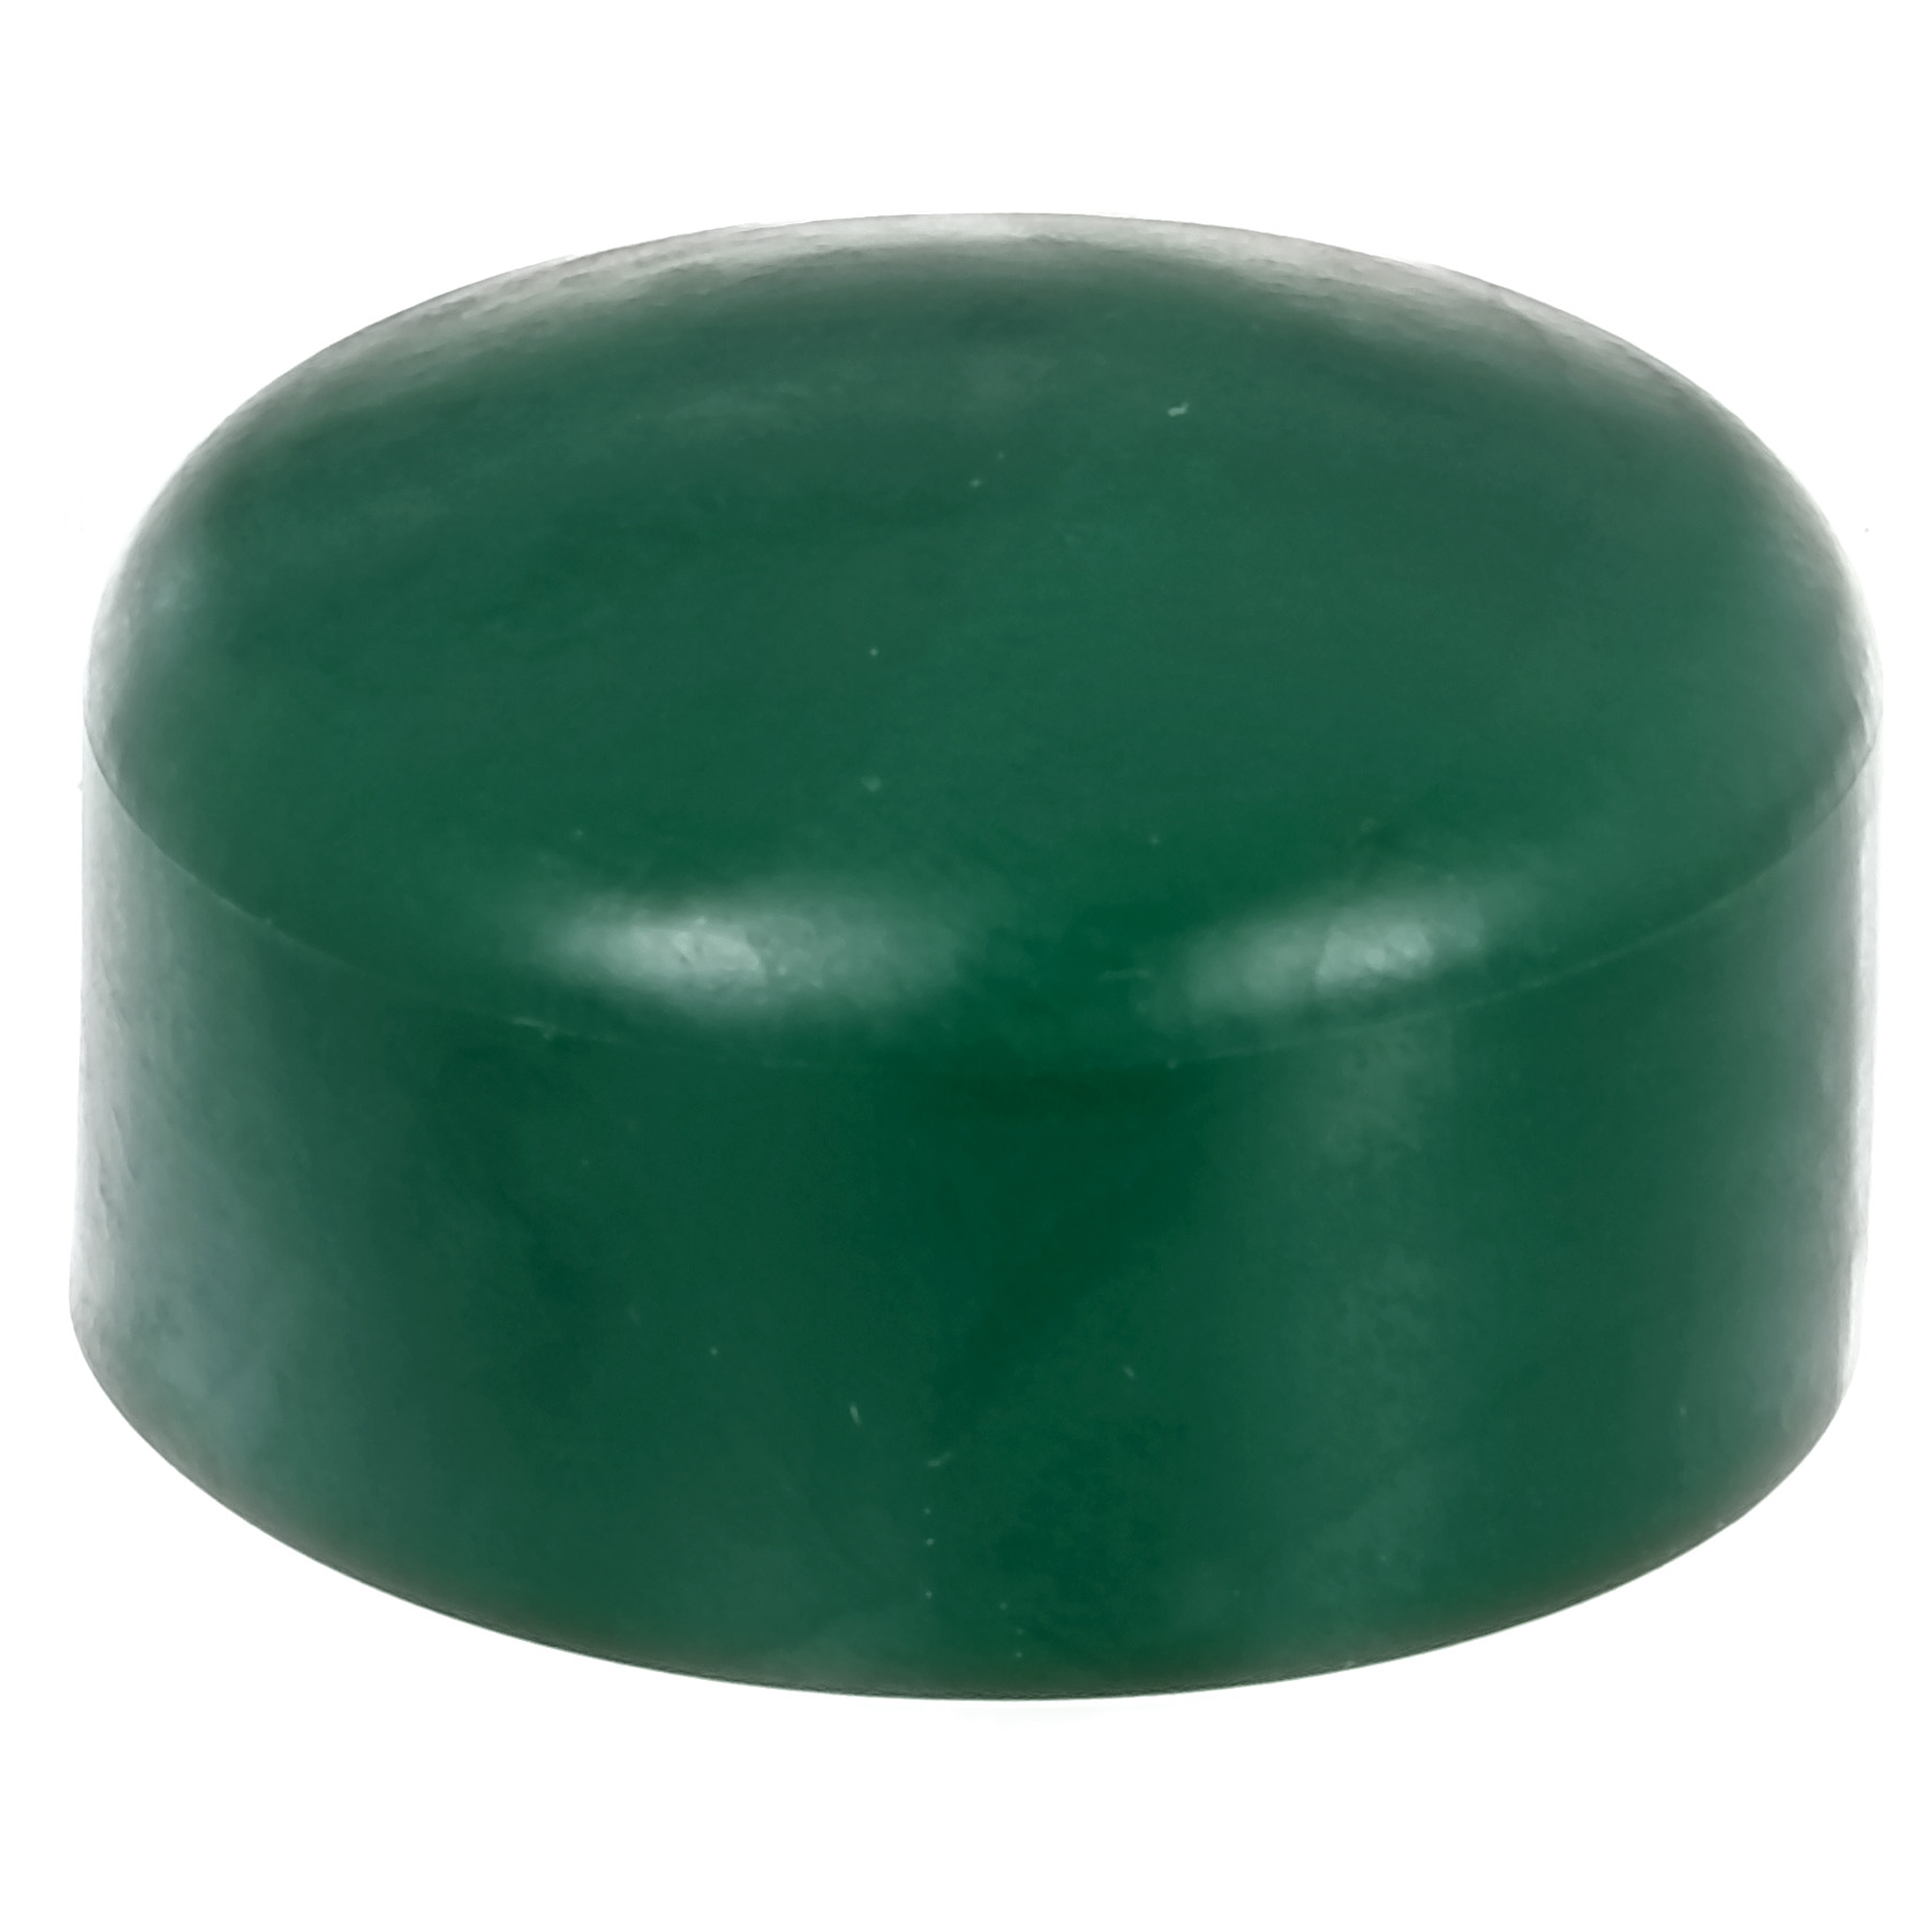 5 Stück grün Zaunpfahlkappe quadratisch Kunststoff Pfostenkappen Zaunkappen PE